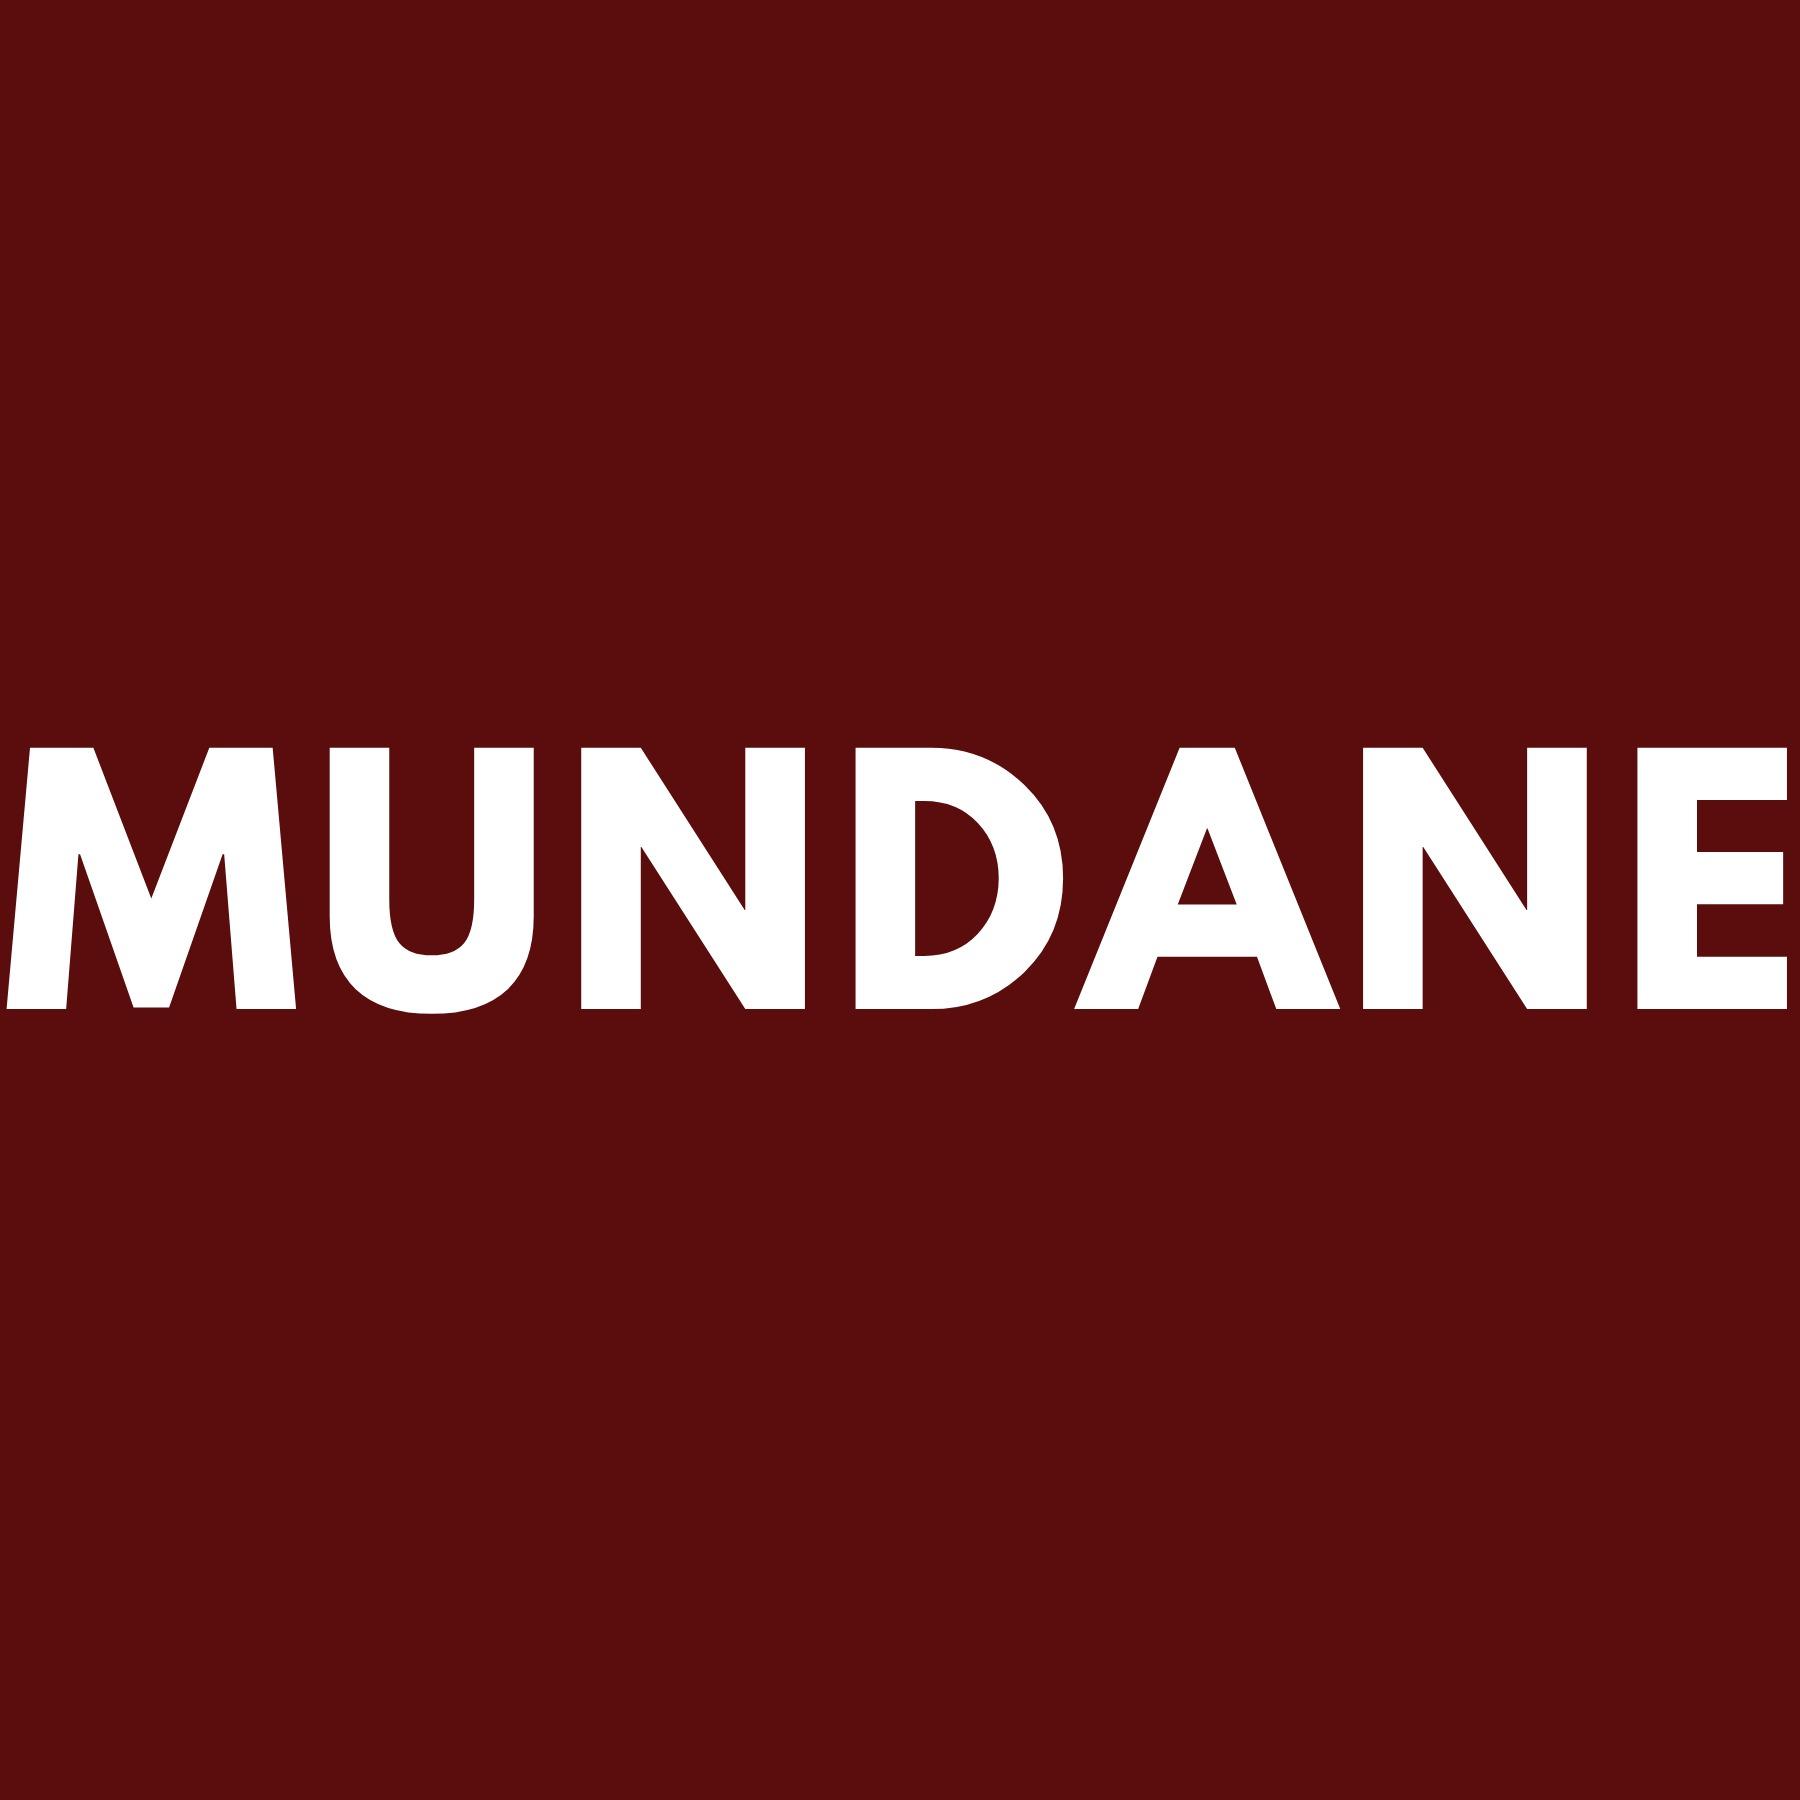 Mundane